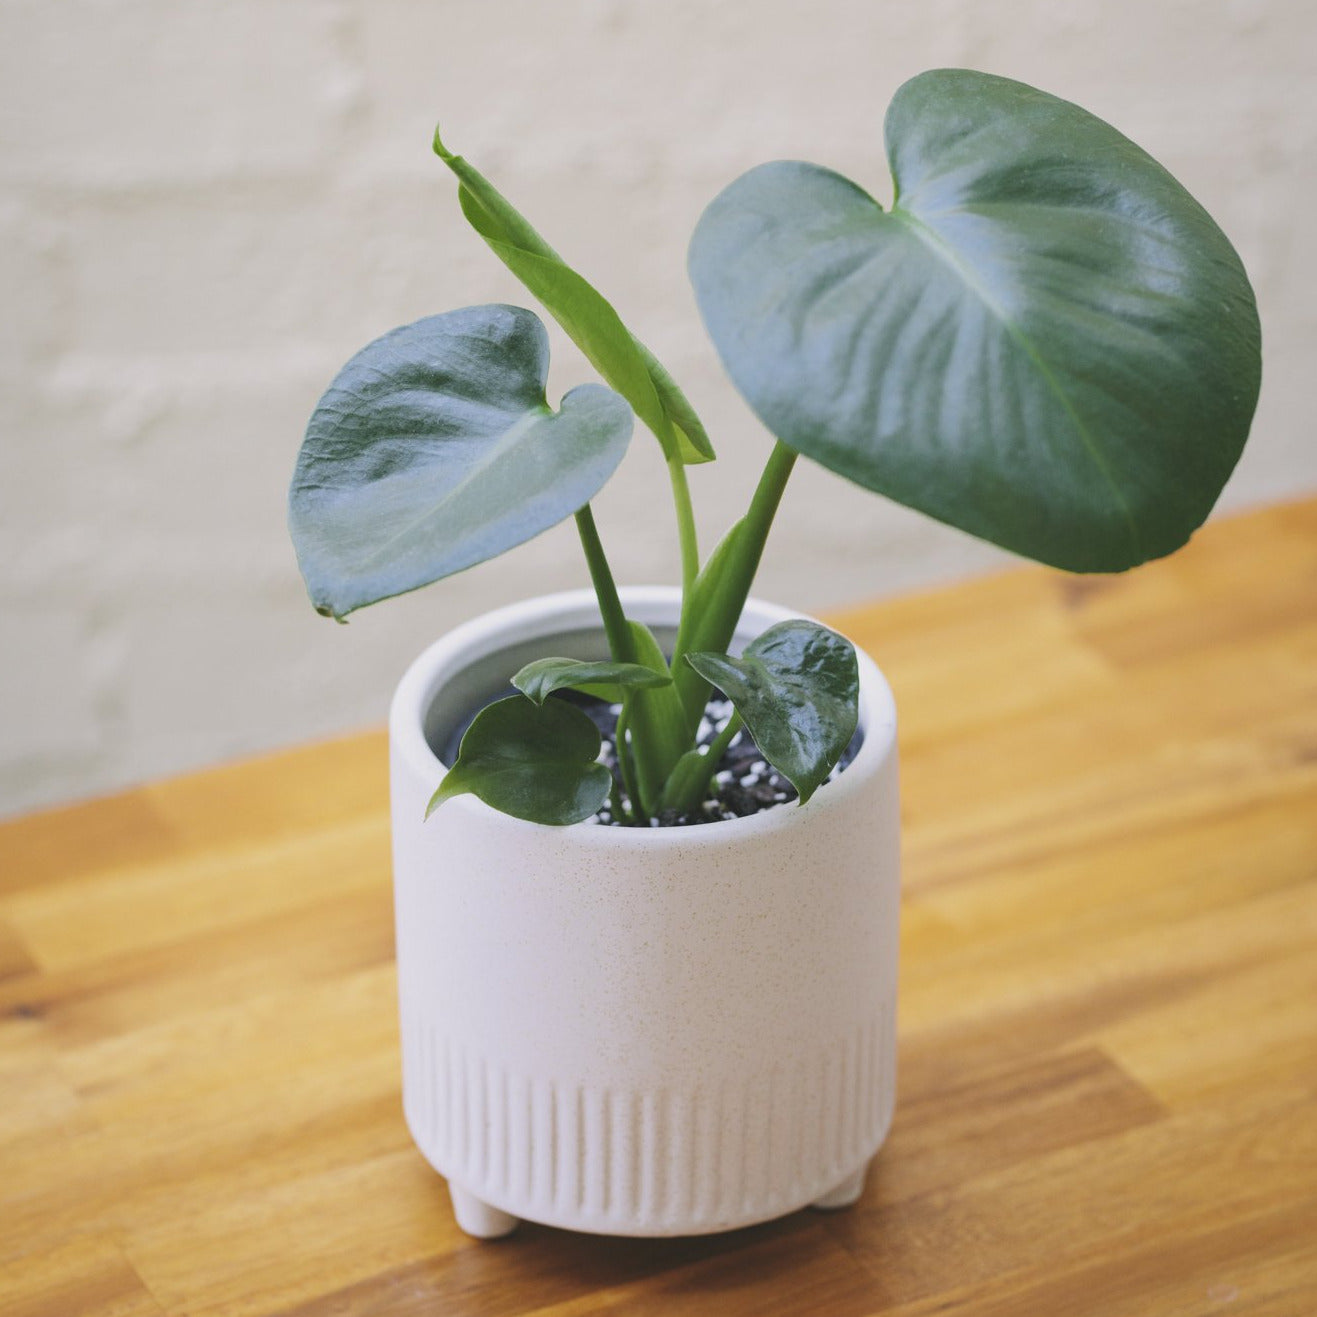 Indoor Plant Delivery Melbourne - Popular Gifts Under $50